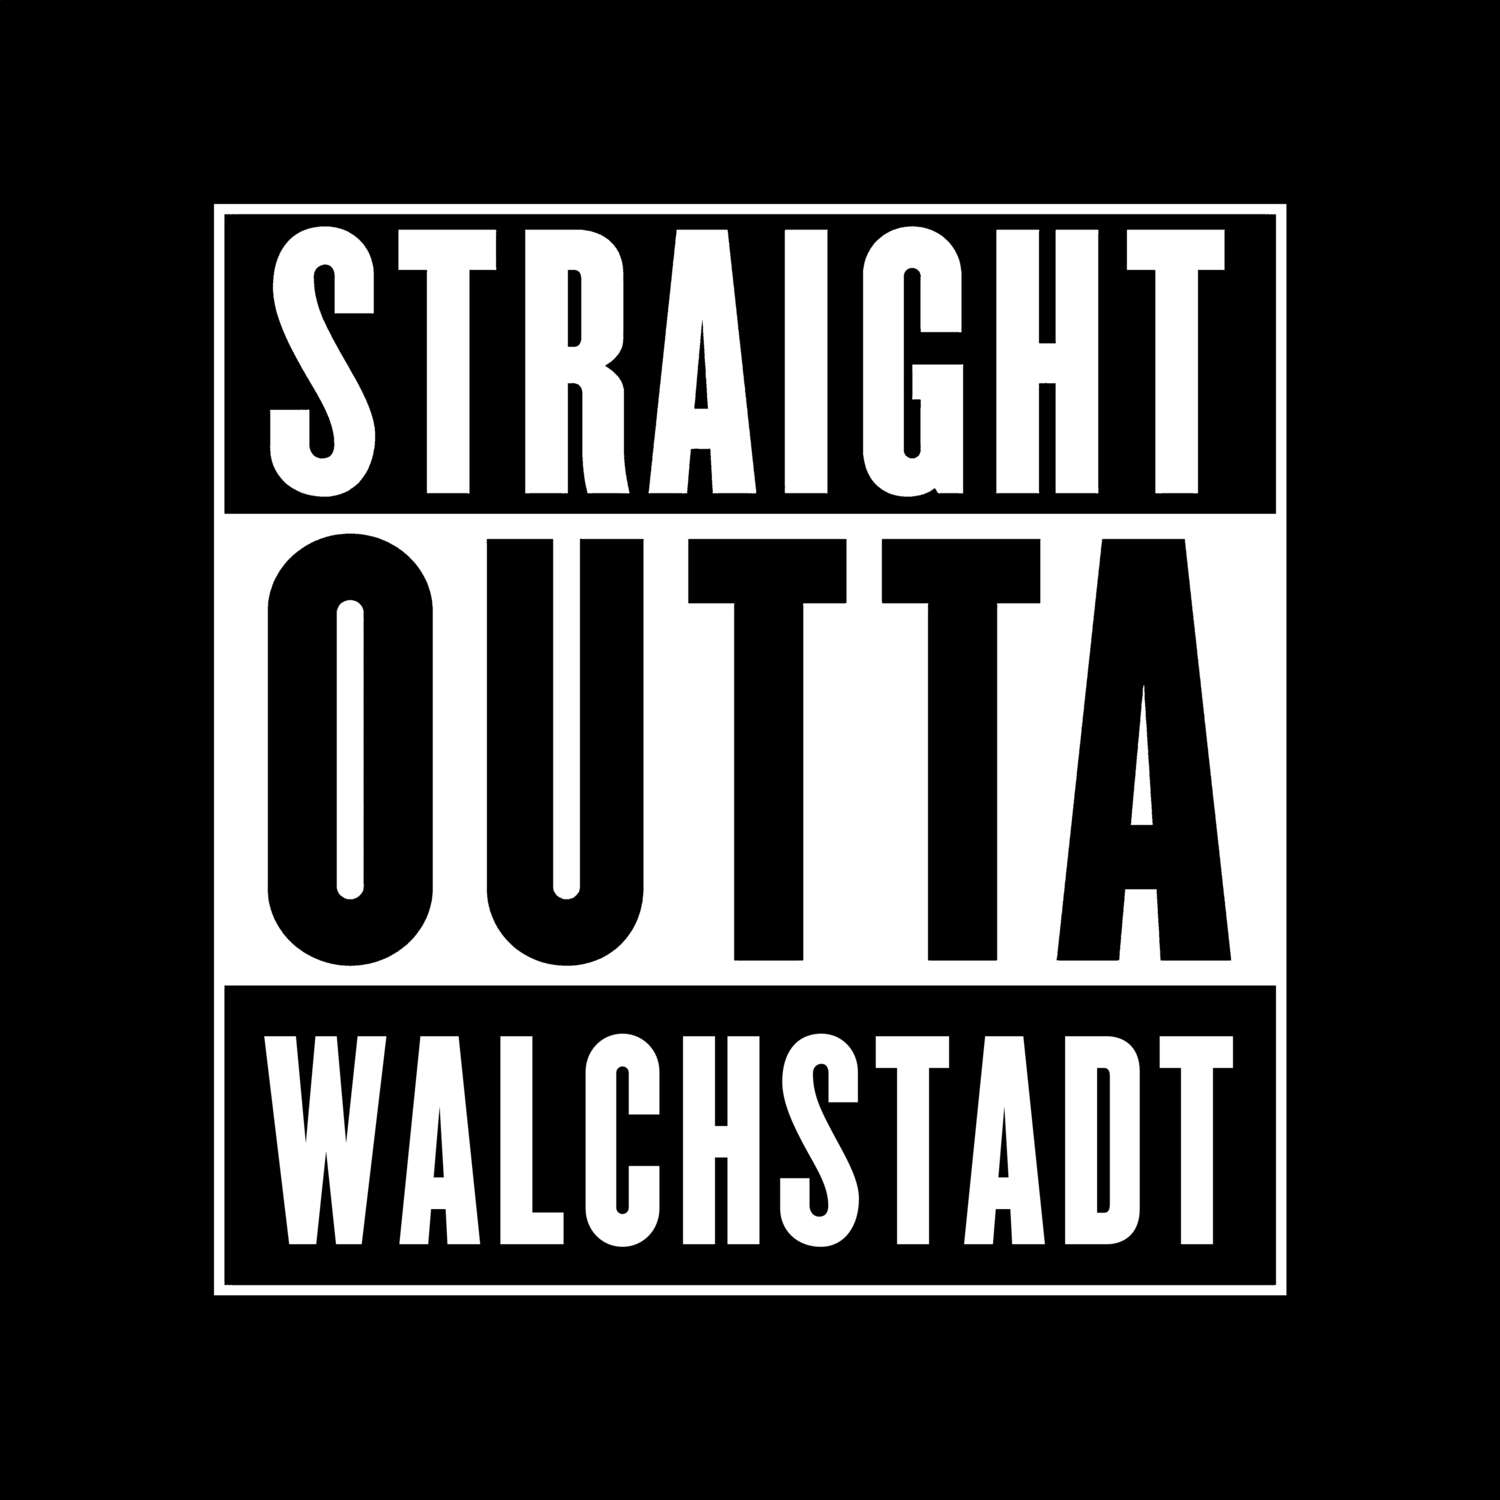 Walchstadt T-Shirt »Straight Outta«